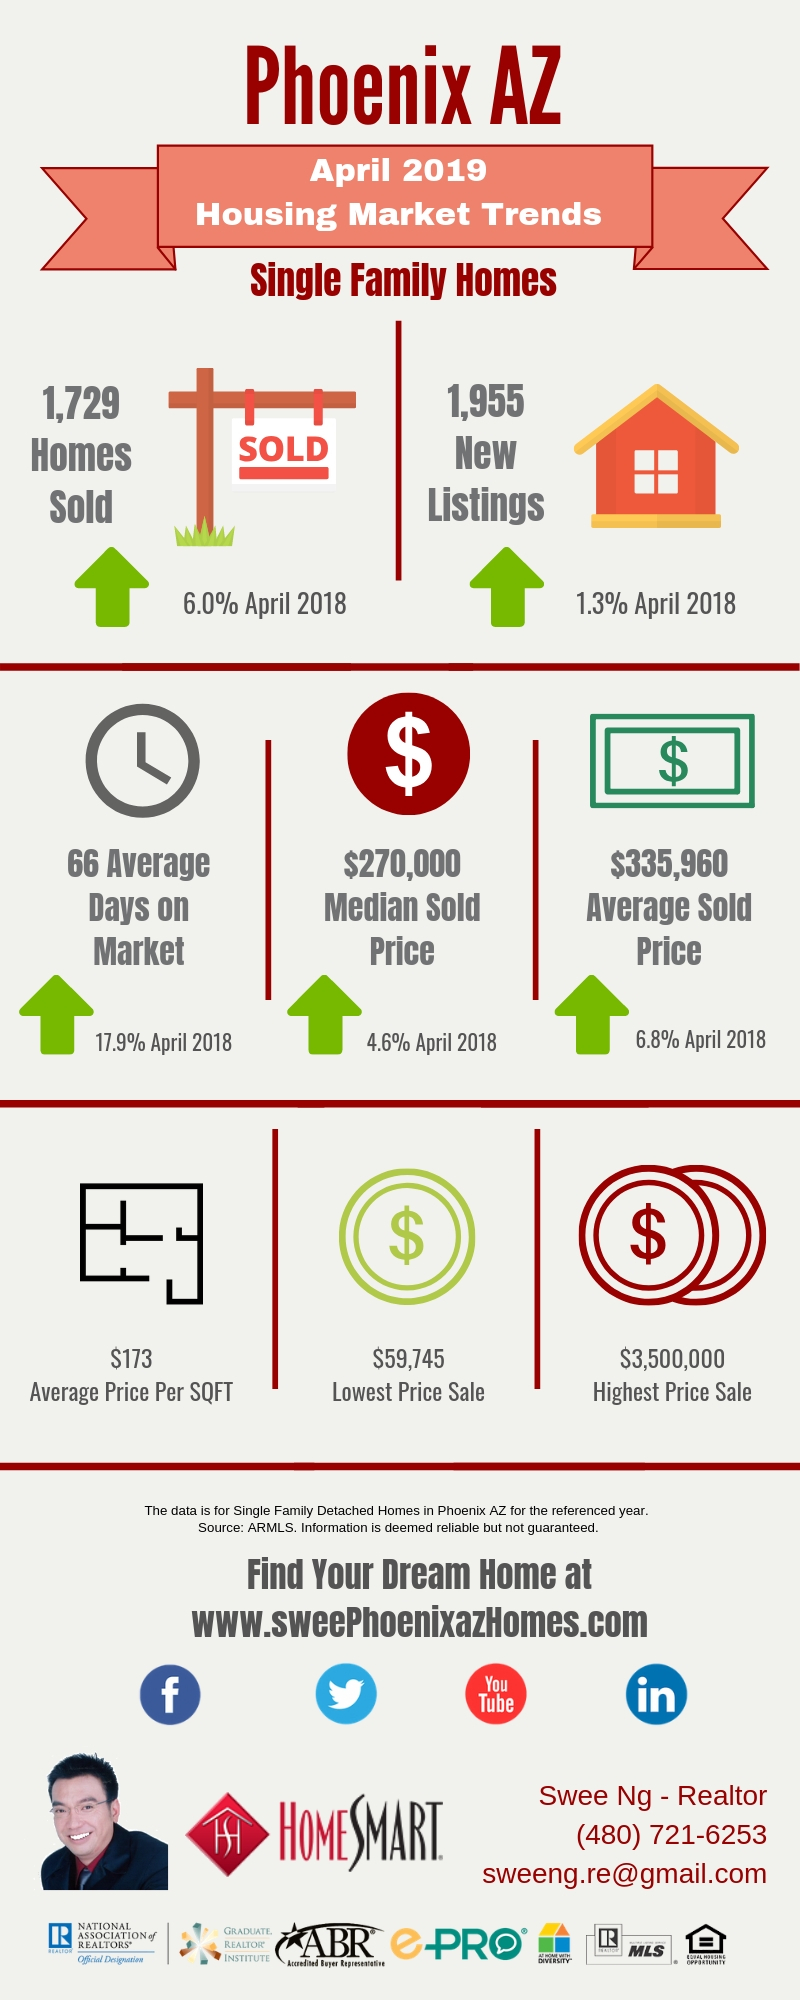 Phoenix AZ Housing Market Trends Report April 2019 by Swee Ng